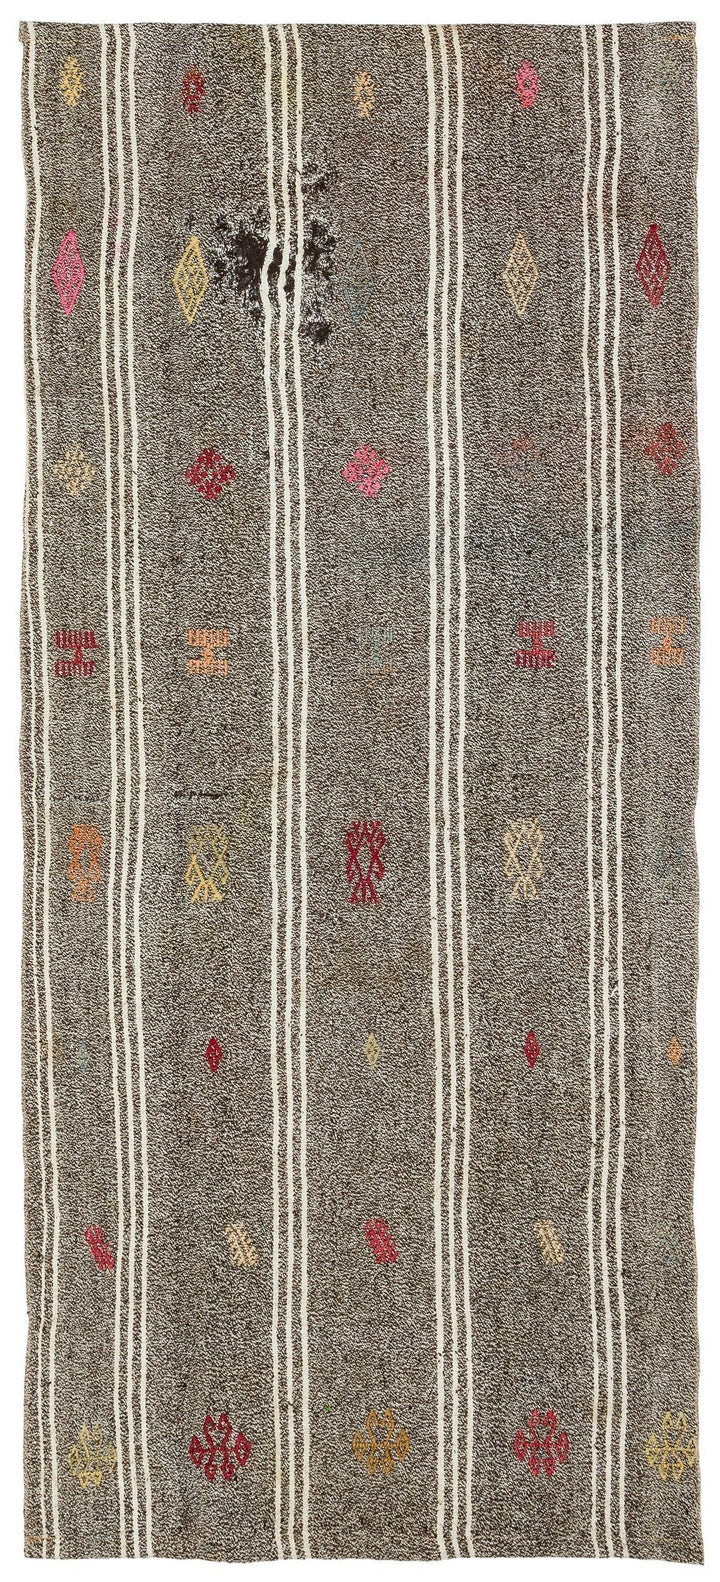 Cretan Brown Striped Wool Hand-Woven Carpet 093 x 211